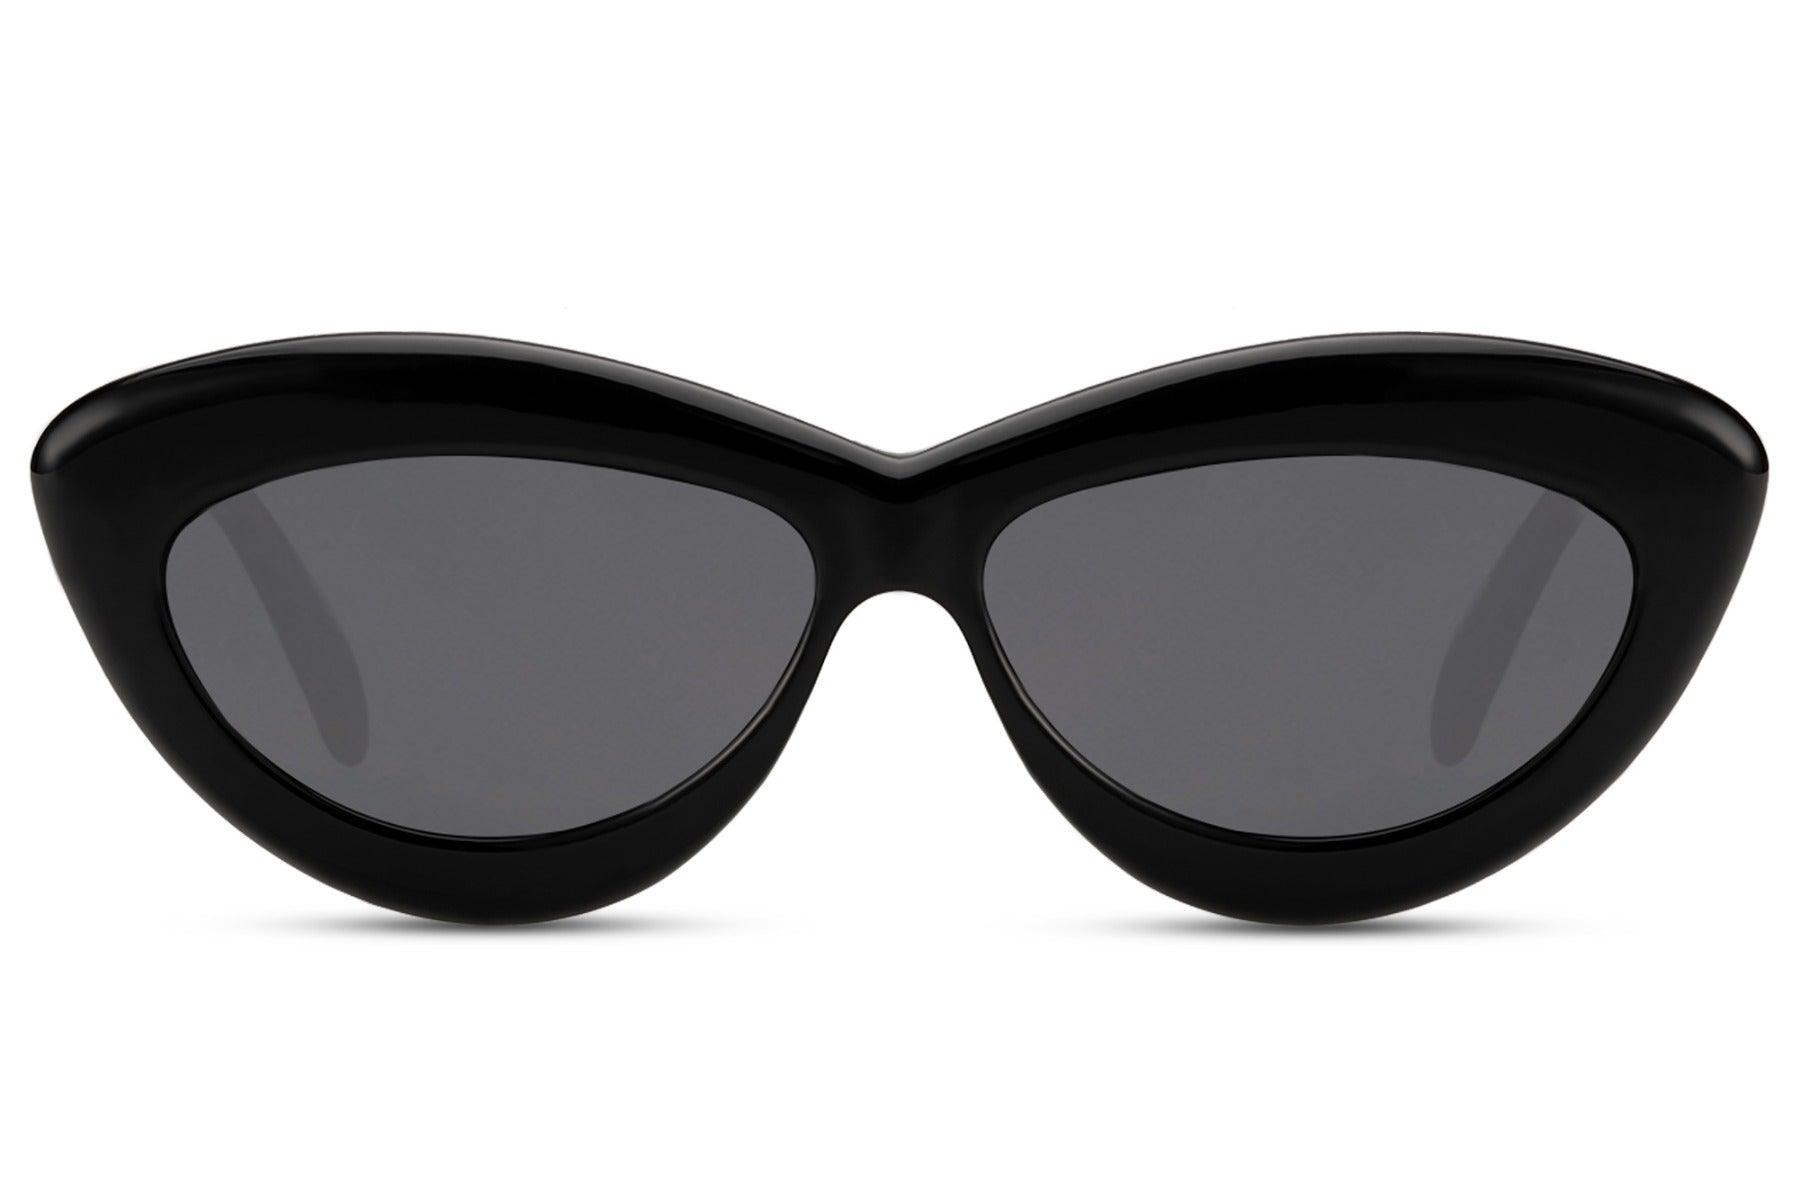 Nippy Black Sly Cat Eye Sunglasses - Blissfully Brand Sleek Mod Retro Thick Women's